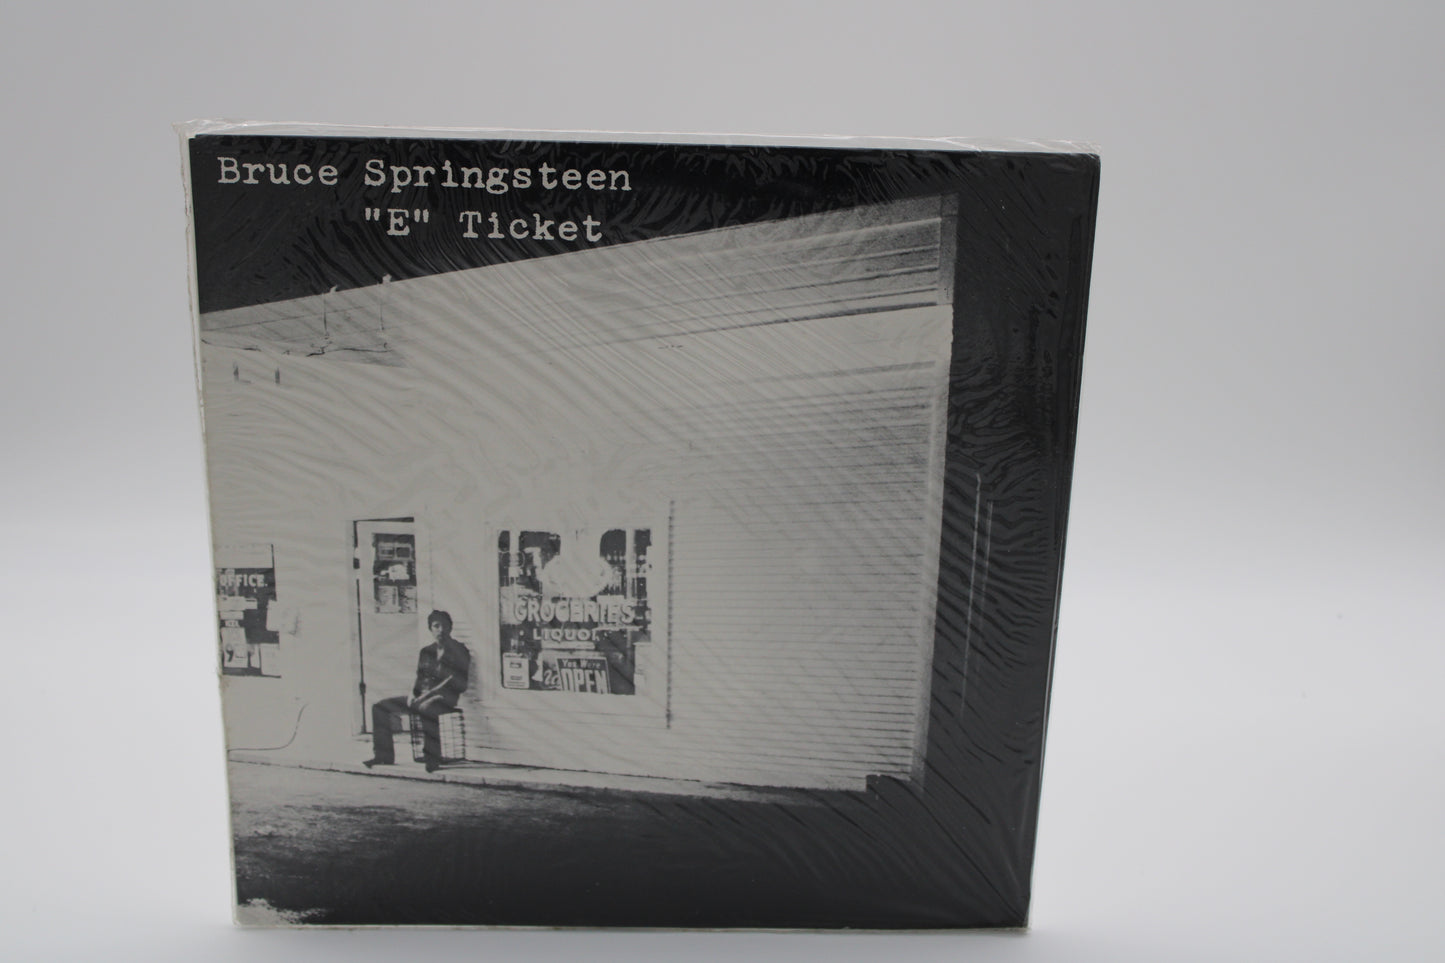 Bruce Springsteen - SEALED "E Ticket" Vinyl Album 1975 - Import Germany - BLV